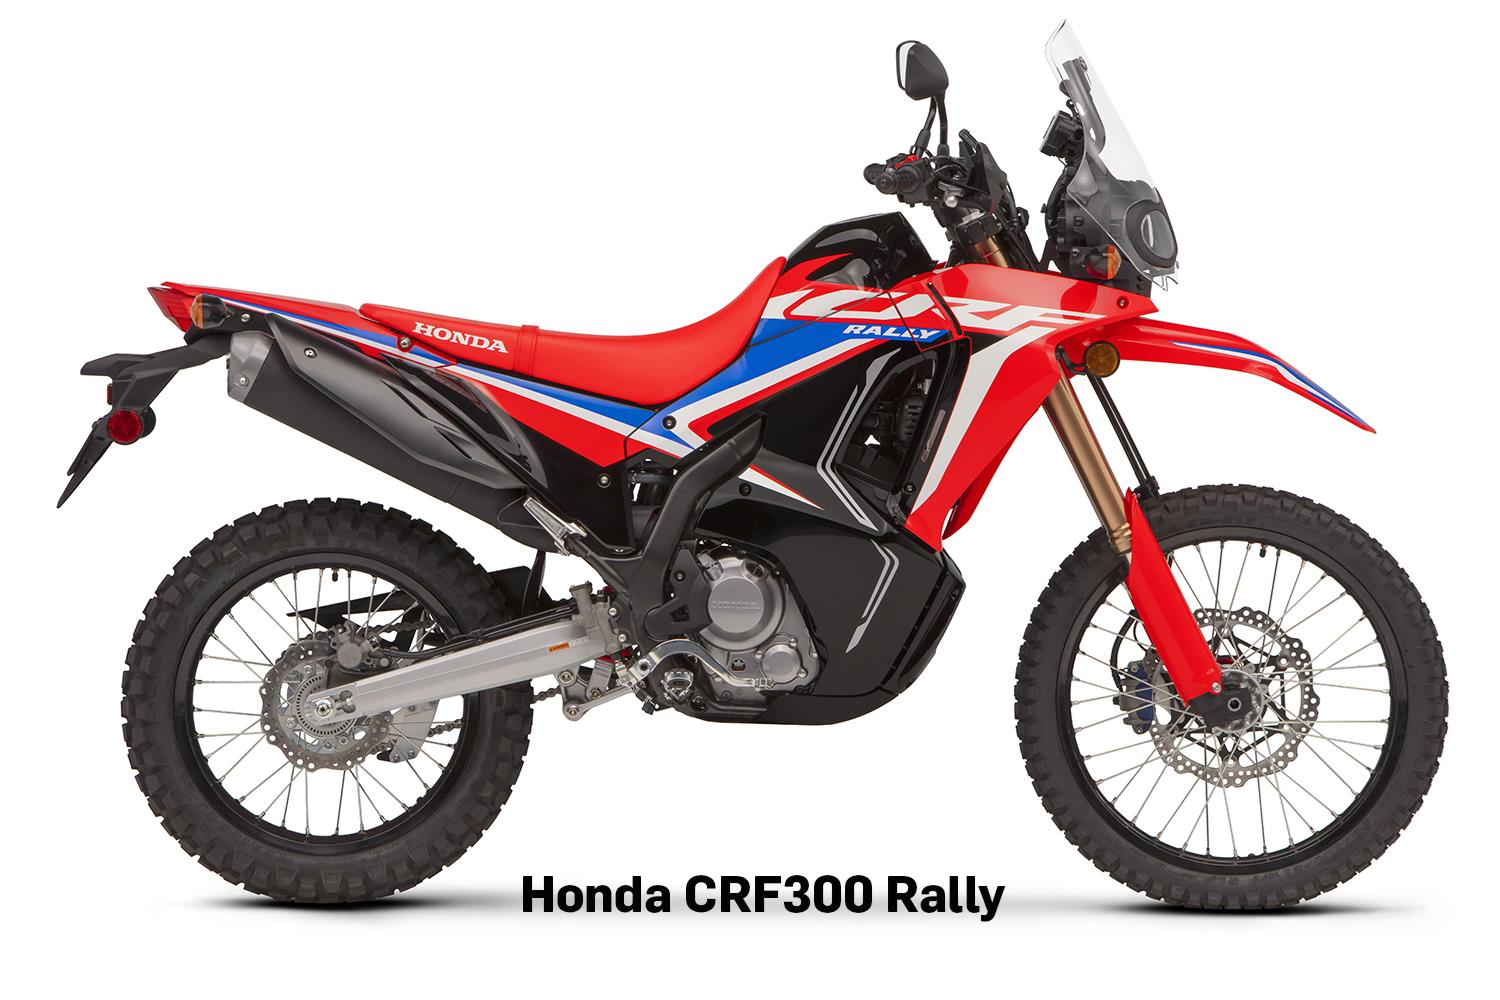 Honda CRF300 Rally long-term test